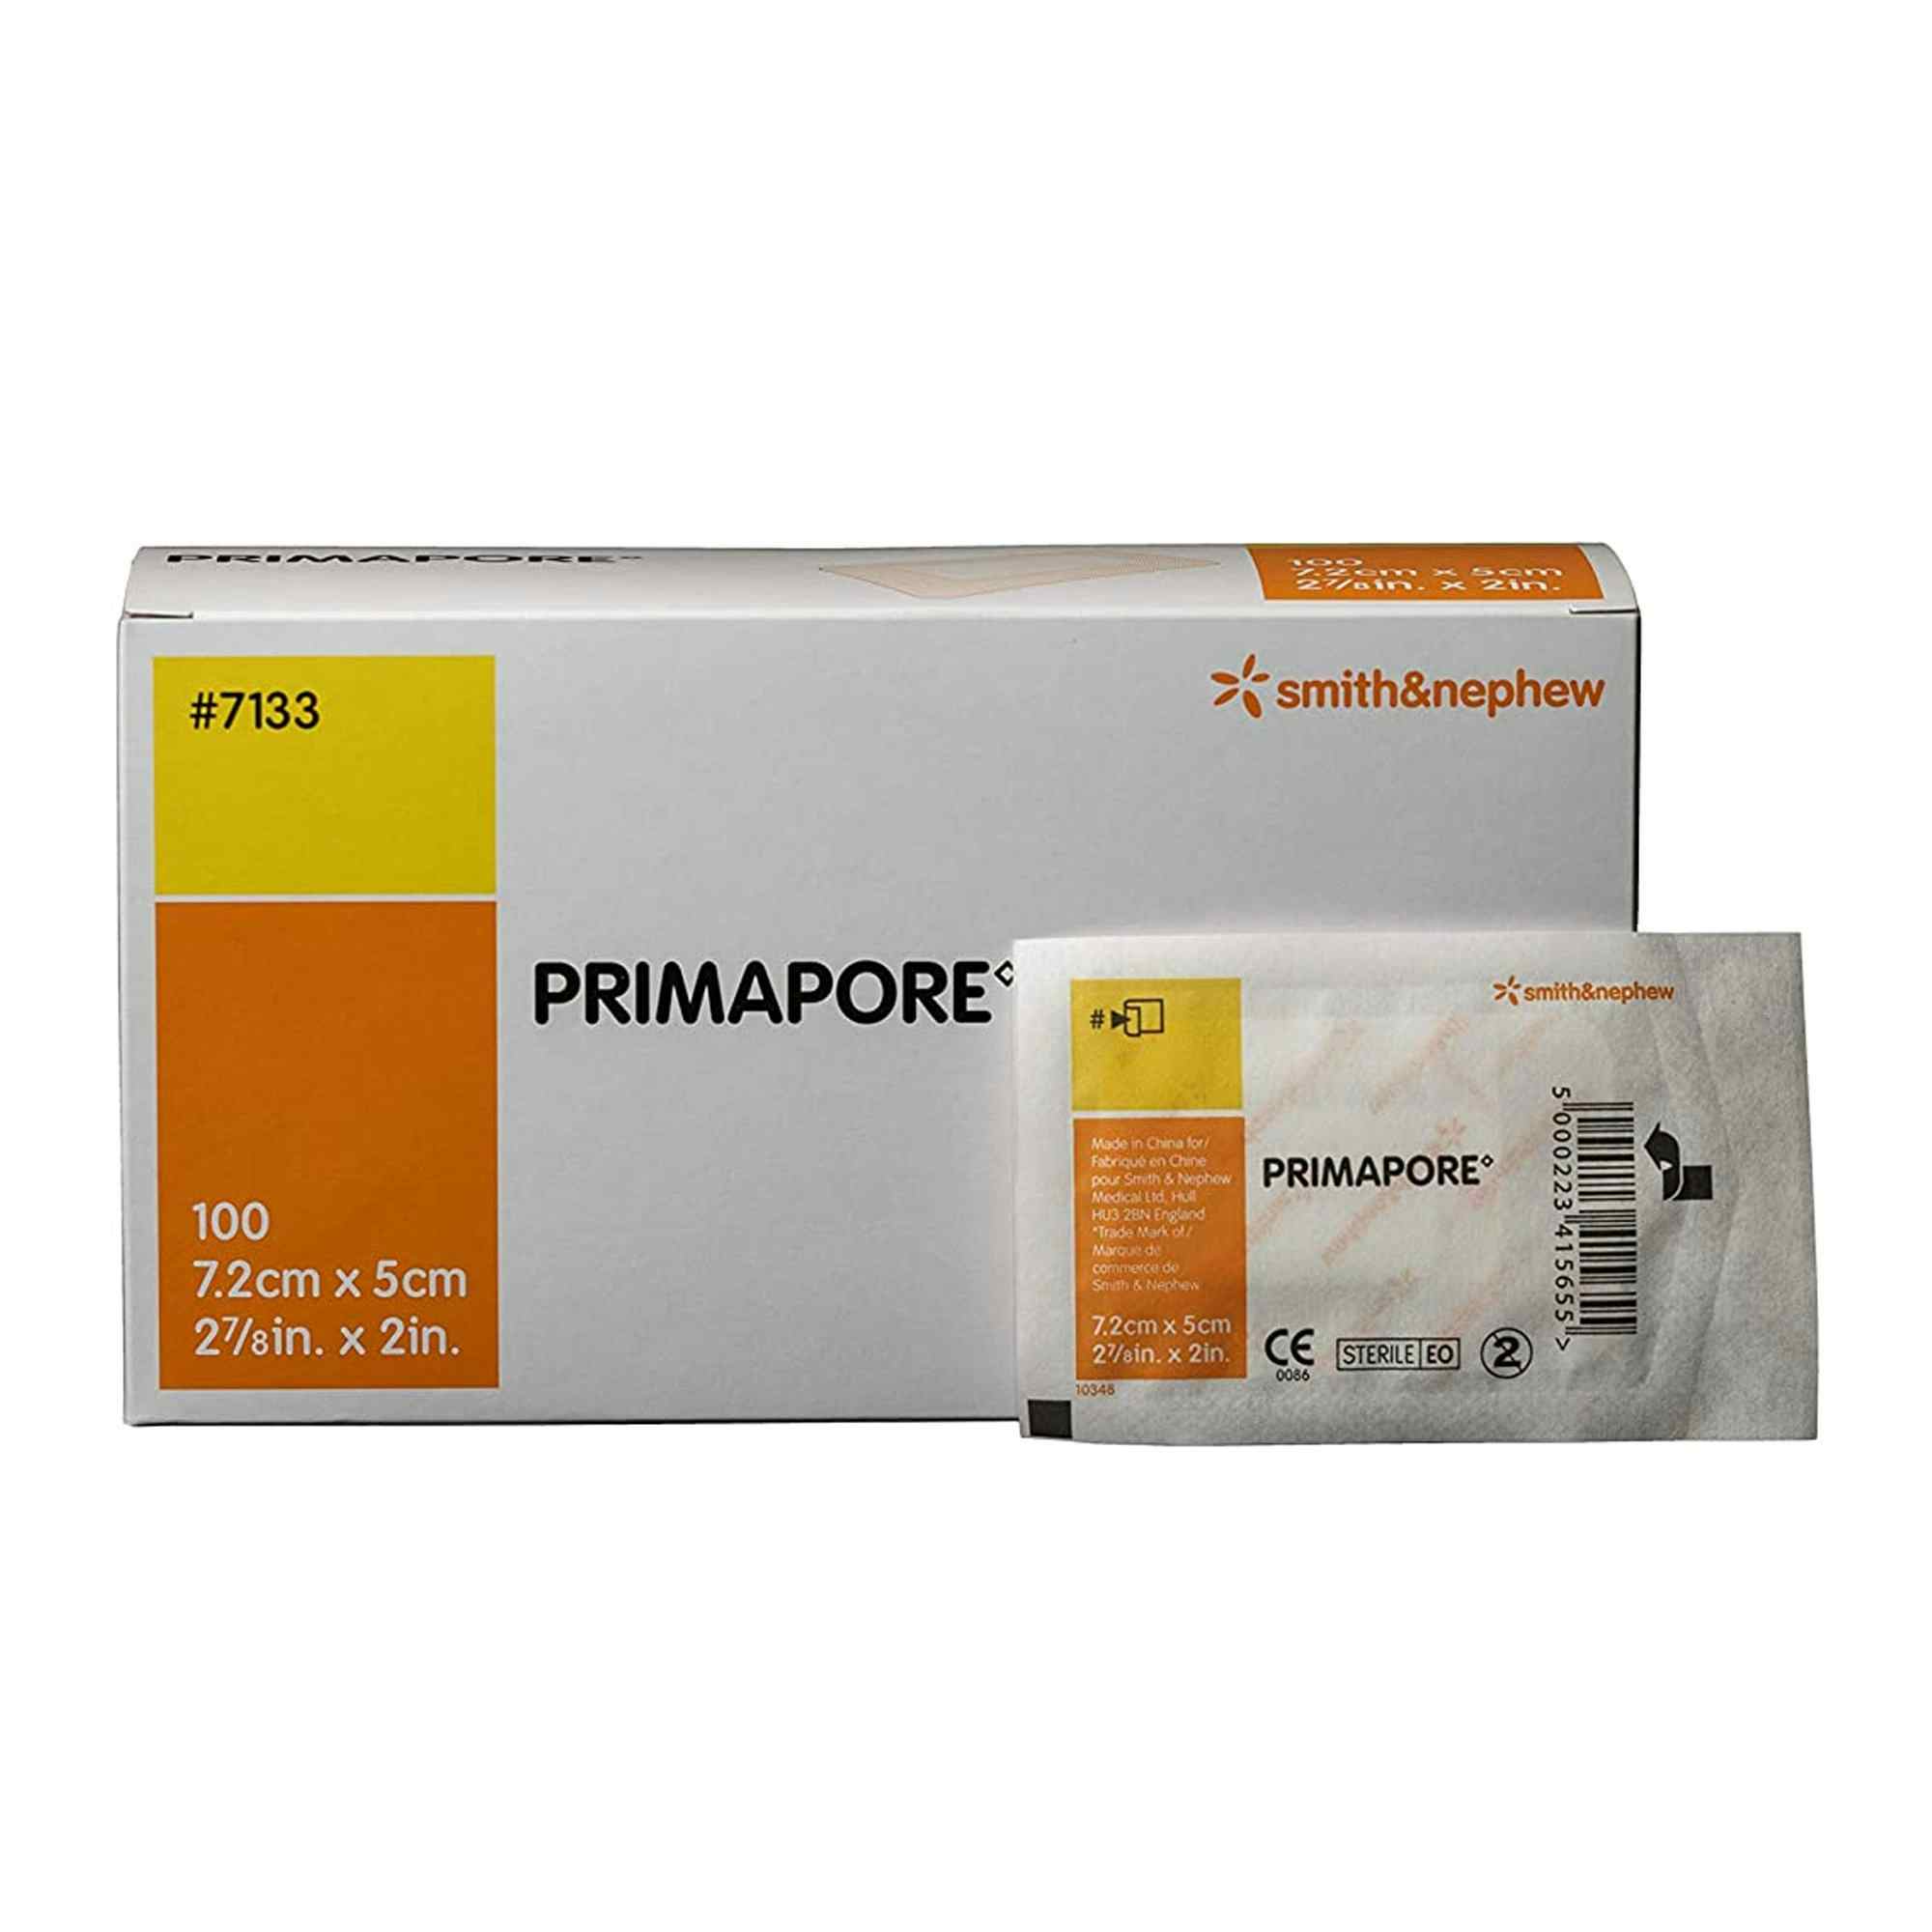 Primapore Adhesive Dressing, 2 X 3", 7133, Box of 100